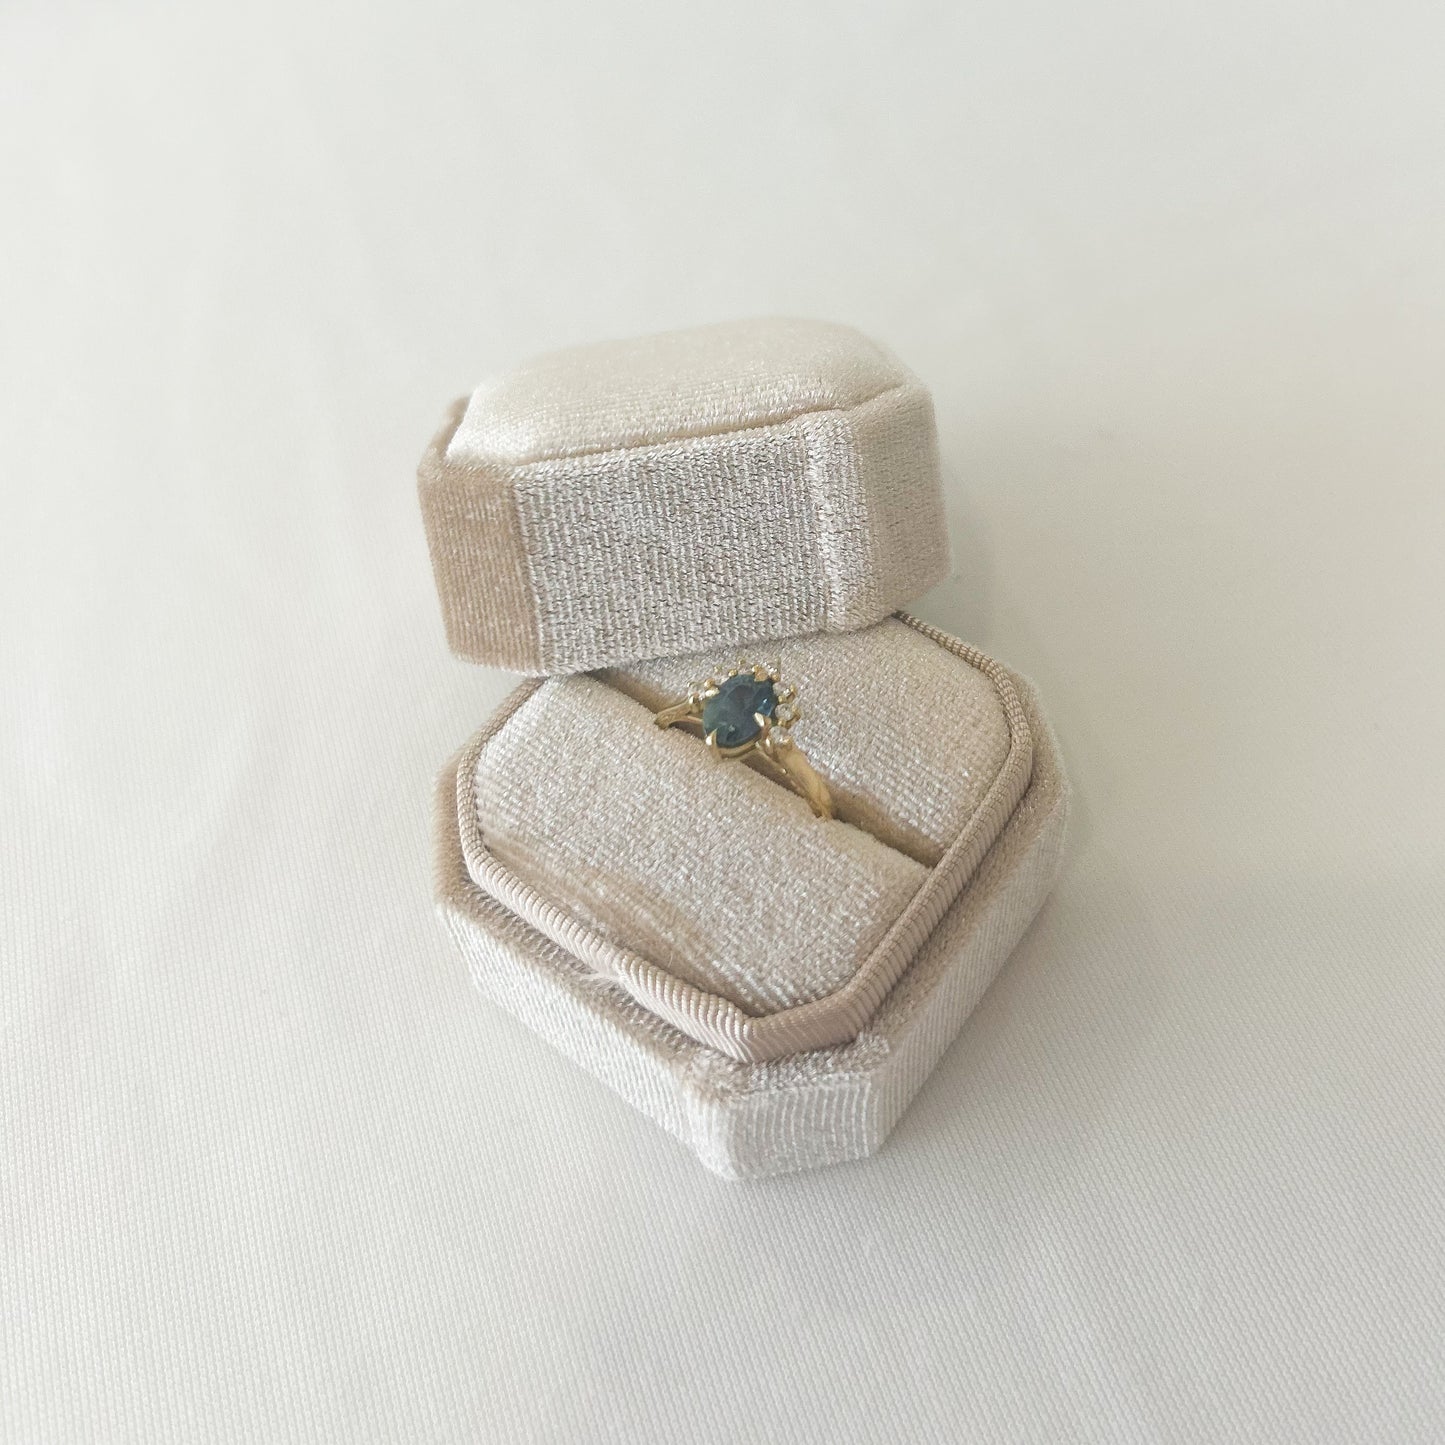 Personalised Velvet Ring Box | Engagement or Wedding | Monogram Initials